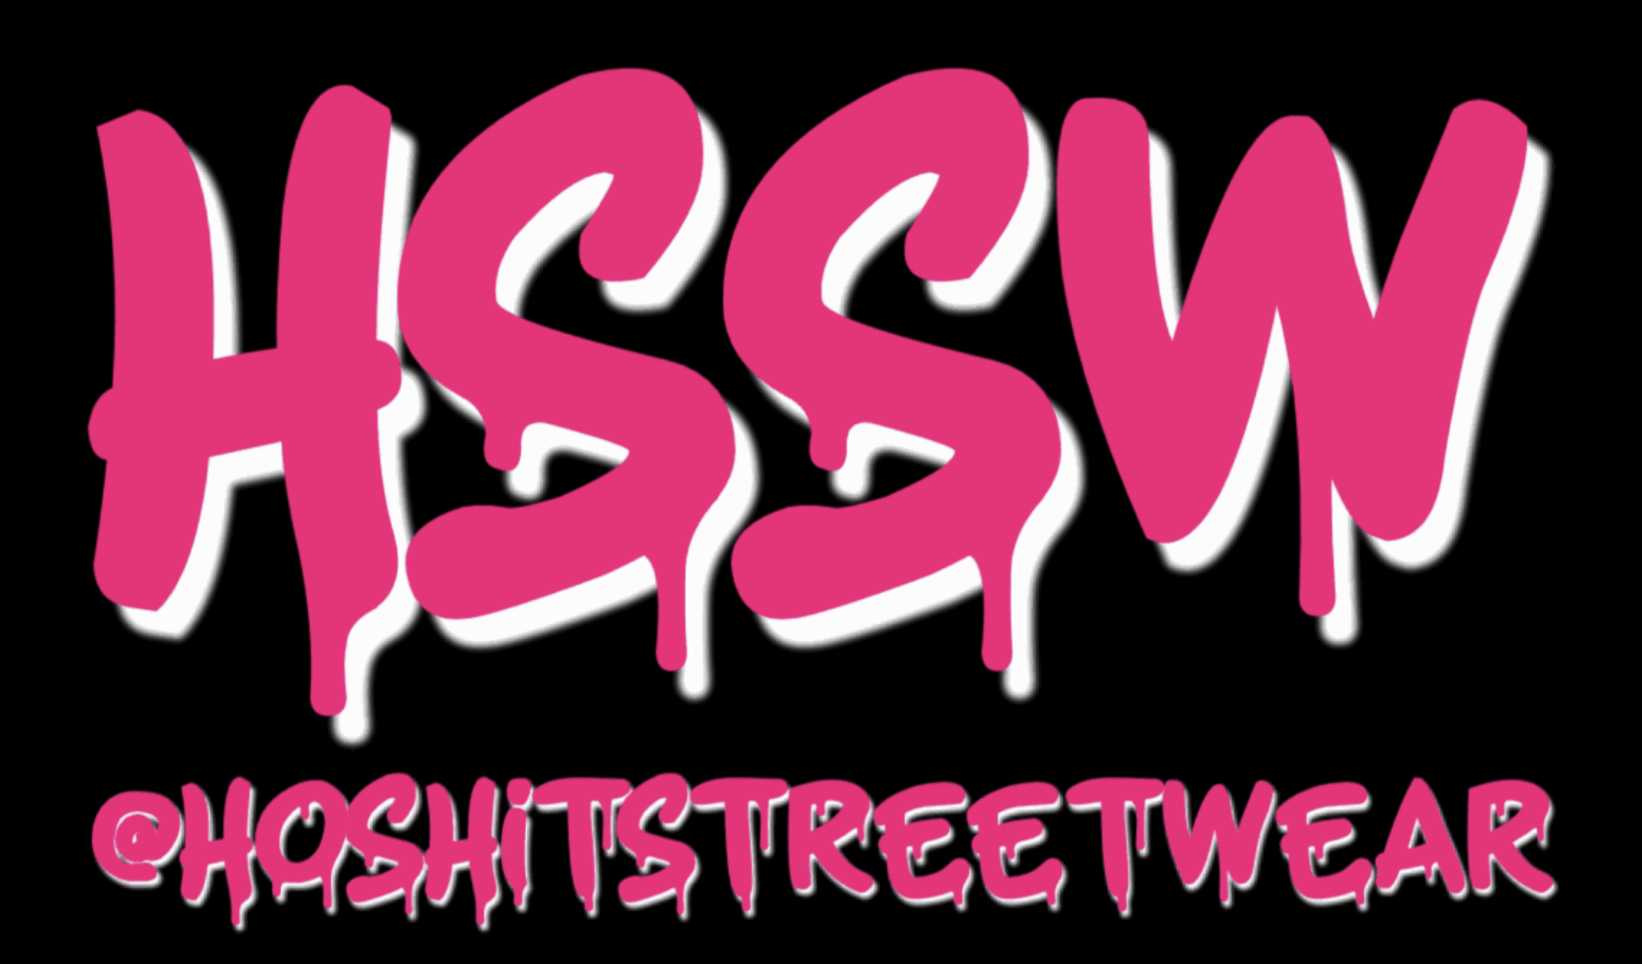 HSSW logo